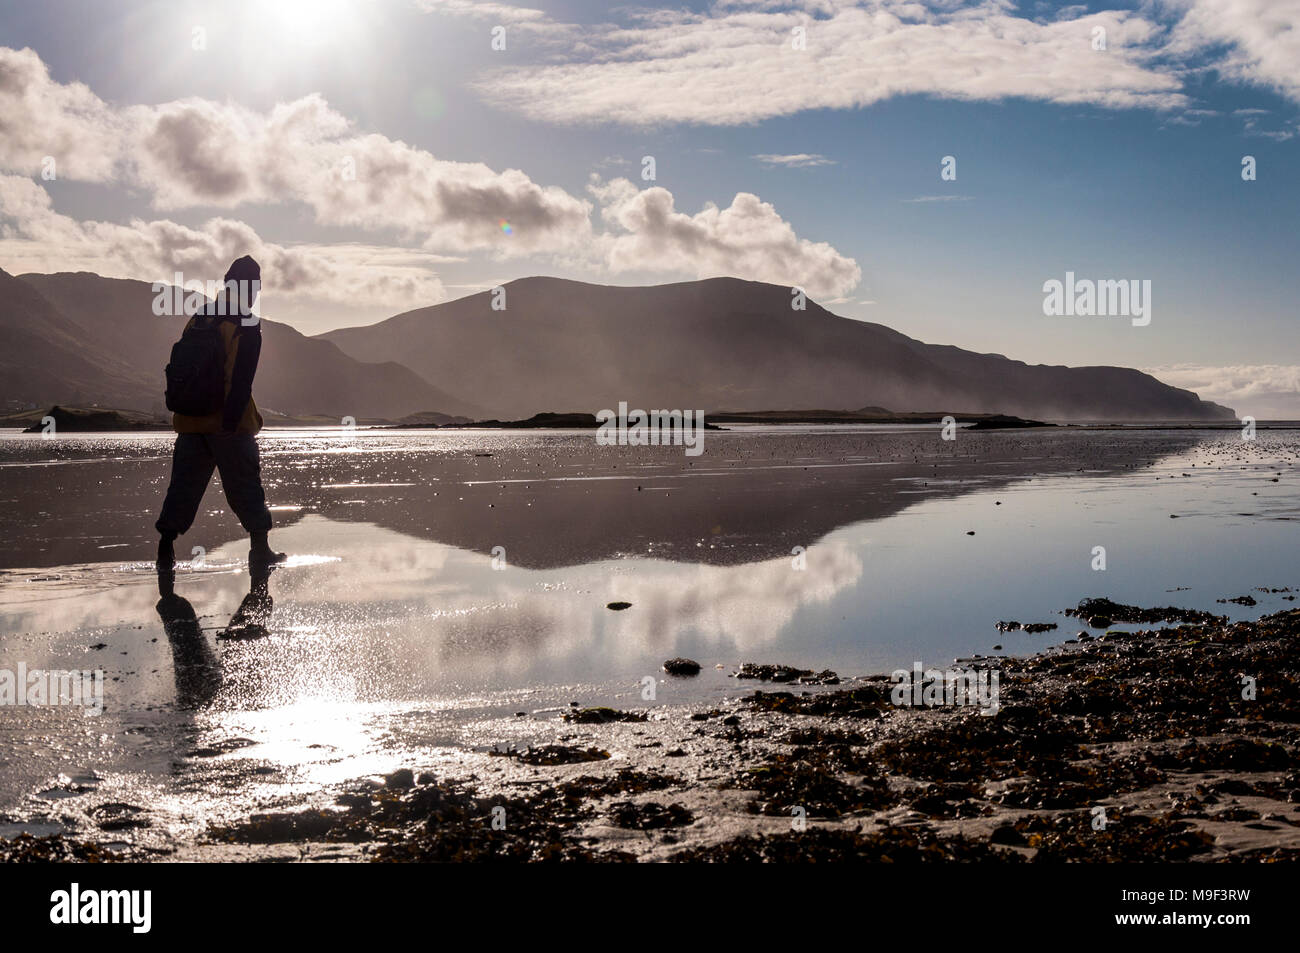 Ardara, County Donegal, Ireland weather. March 25th 2018. A beach walker enjoys the fine weather on Ireland's 'Wild Atlantic Way' coastline. Photo by : Richard Wayman Stock Photo